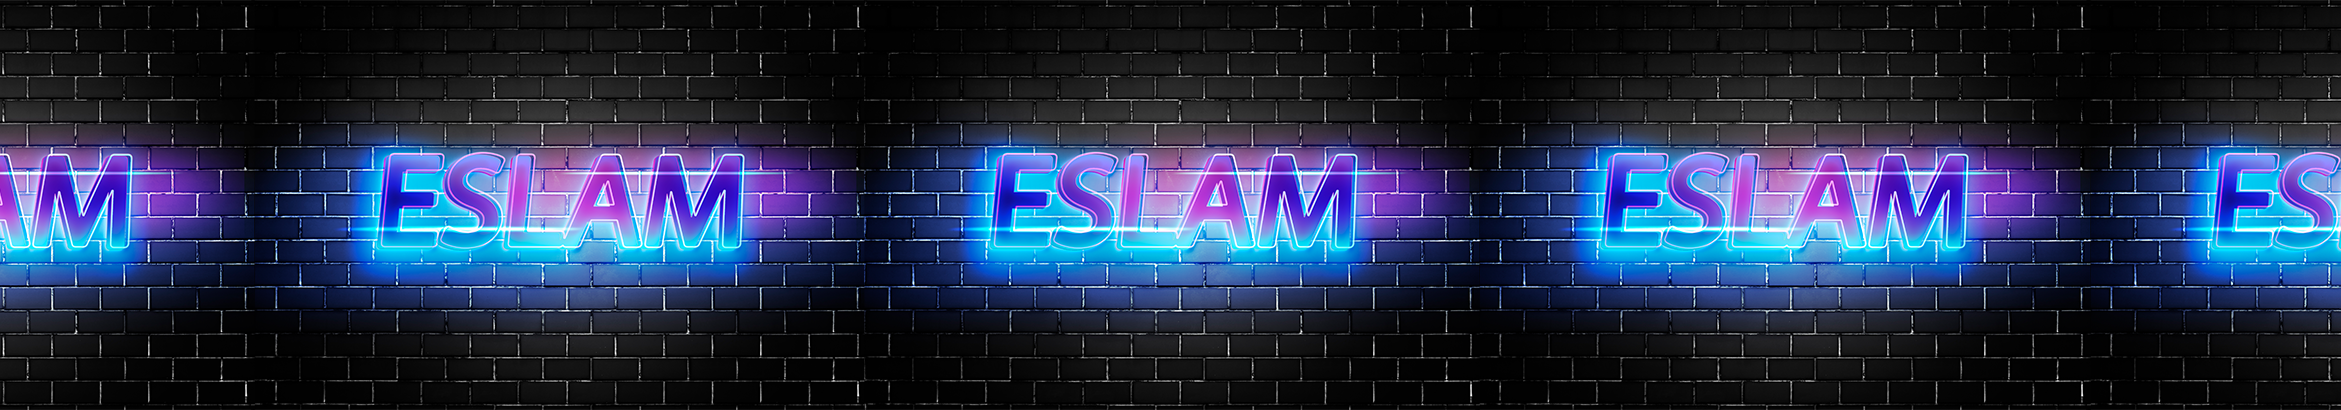 Eslam Marwan's profile banner